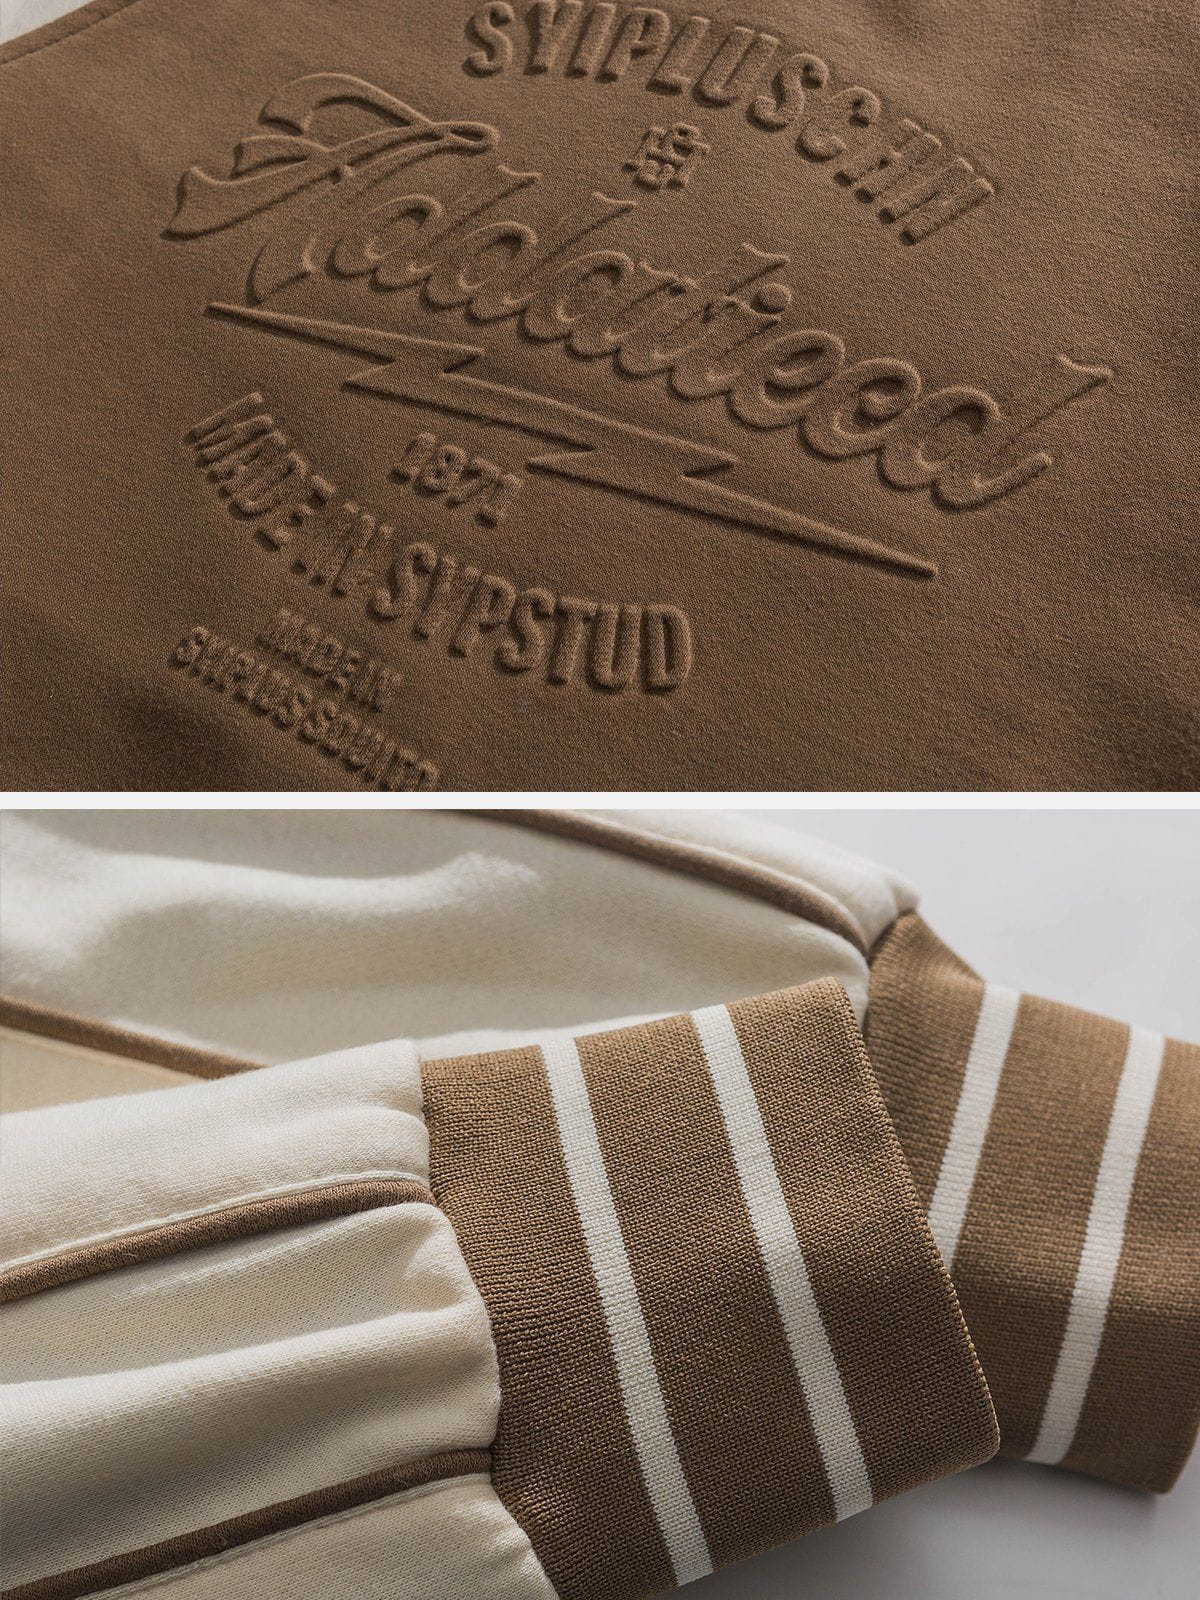 Majesda® - Vintage 3D Letter Print Varsity Jacket outfit ideas, streetwear fashion - majesda.com